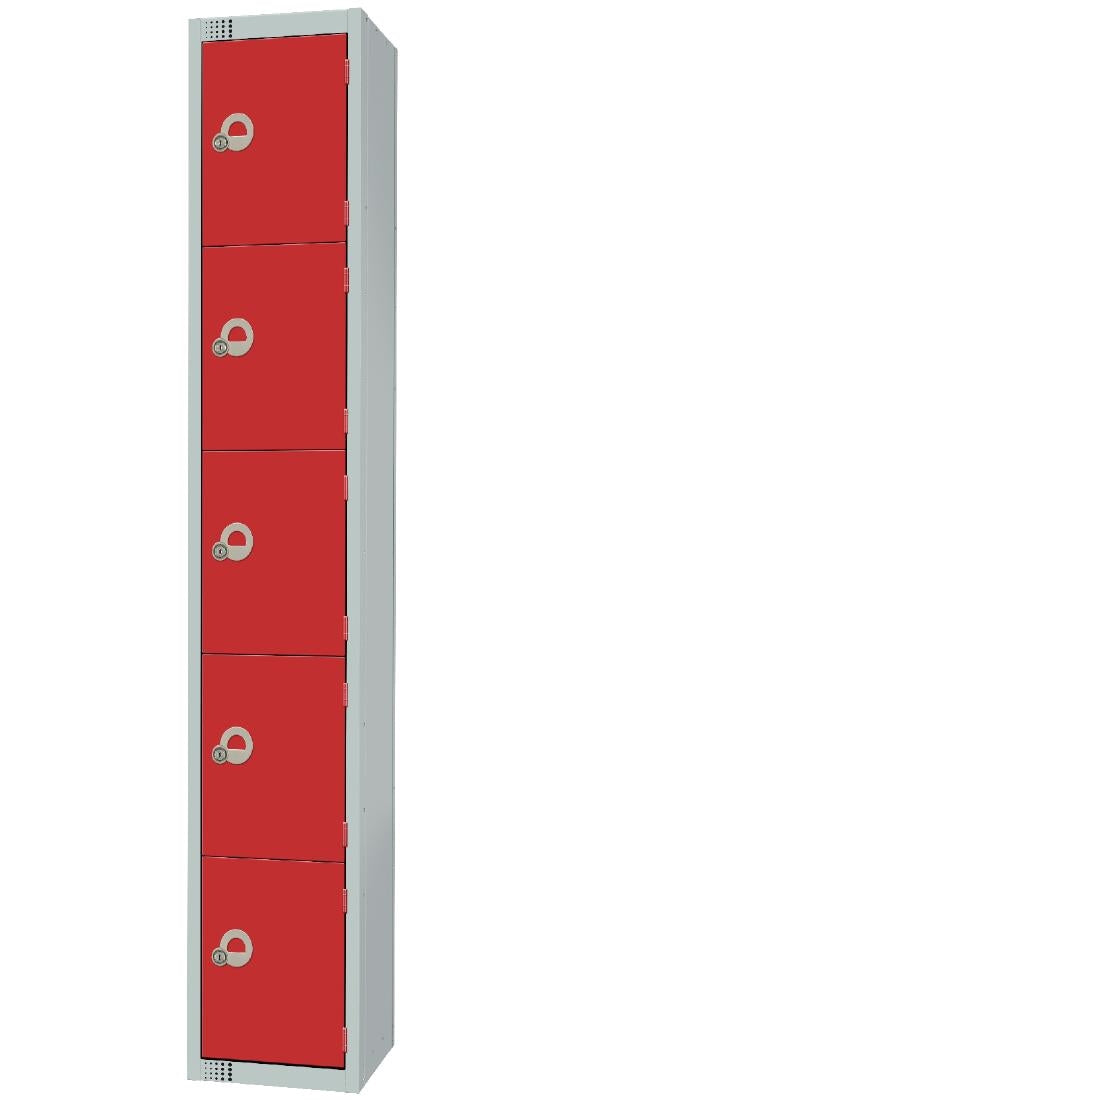 CG618-CNS Elite Five Door Coin Return Locker with Sloping Top Red JD Catering Equipment Solutions Ltd